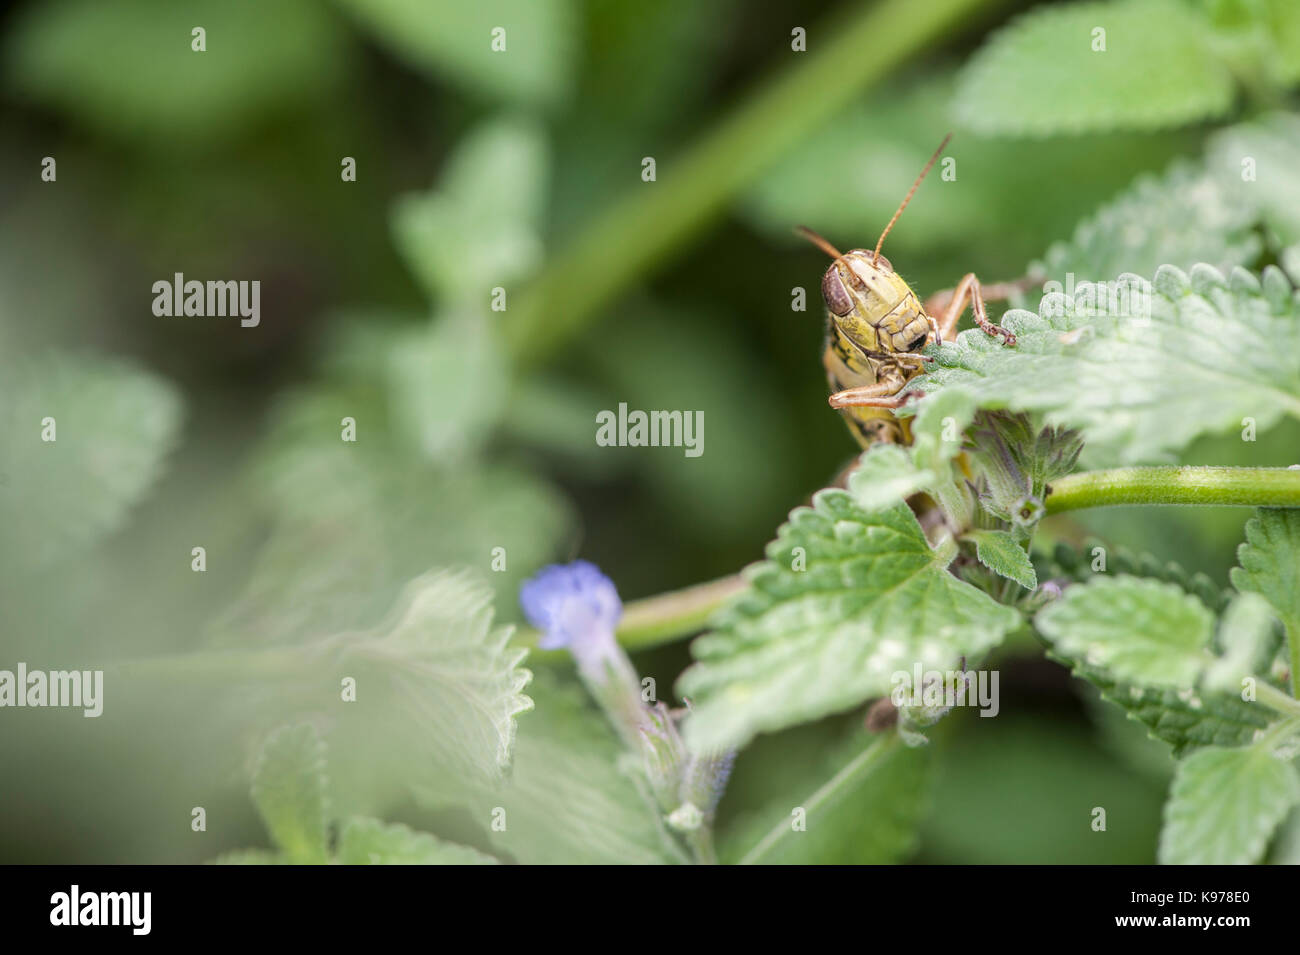 Red-Legged Grasshopper in Cat Mint Plant Stock Photo